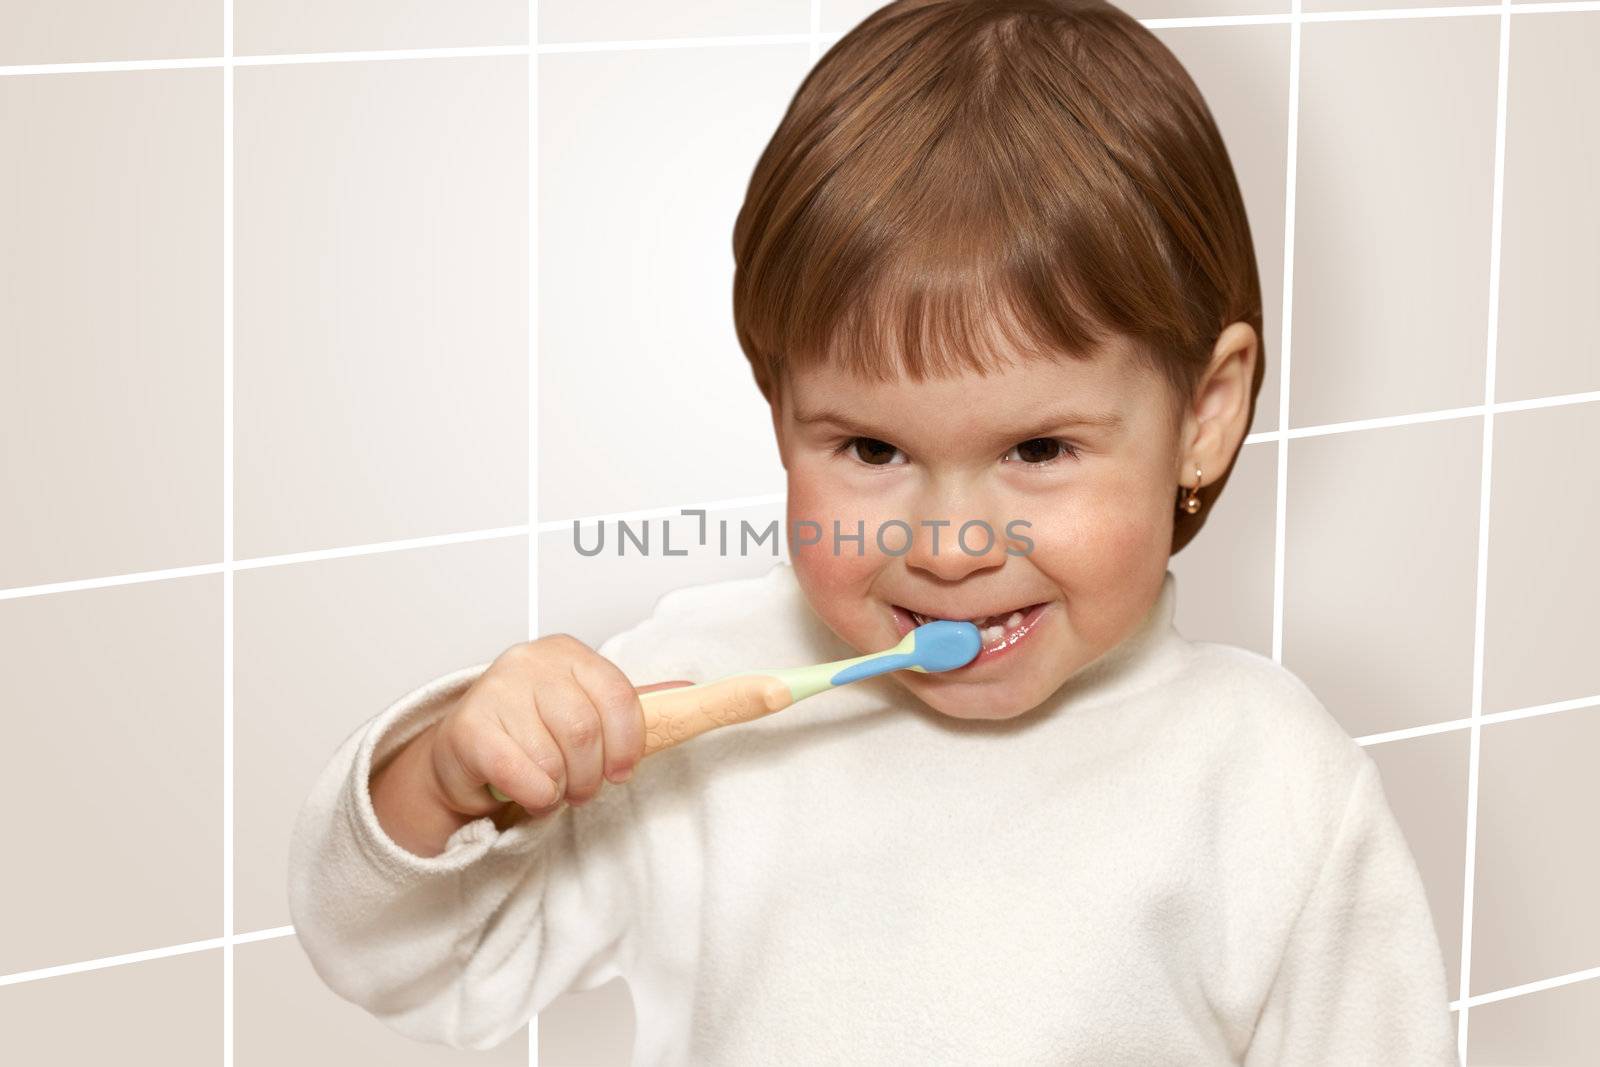 The child in a light bathroom. Hygiene by petrkurgan